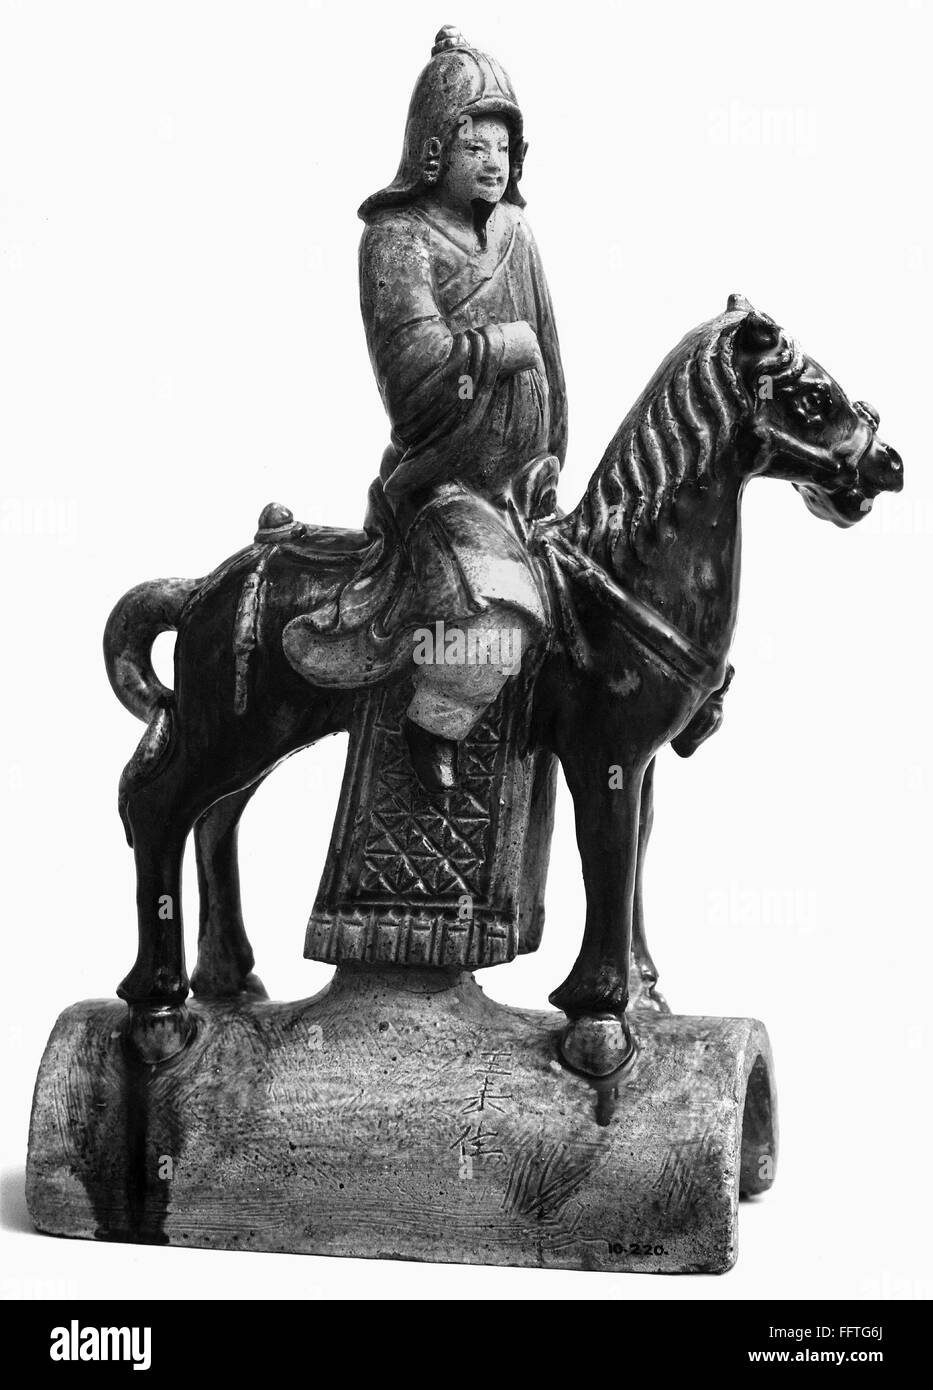 CHINA: guerrero montado. /NGlazed teja de barro en forma de cavalryman a caballo. Dinastía Ming, a finales del siglo xiv-xv. Foto de stock